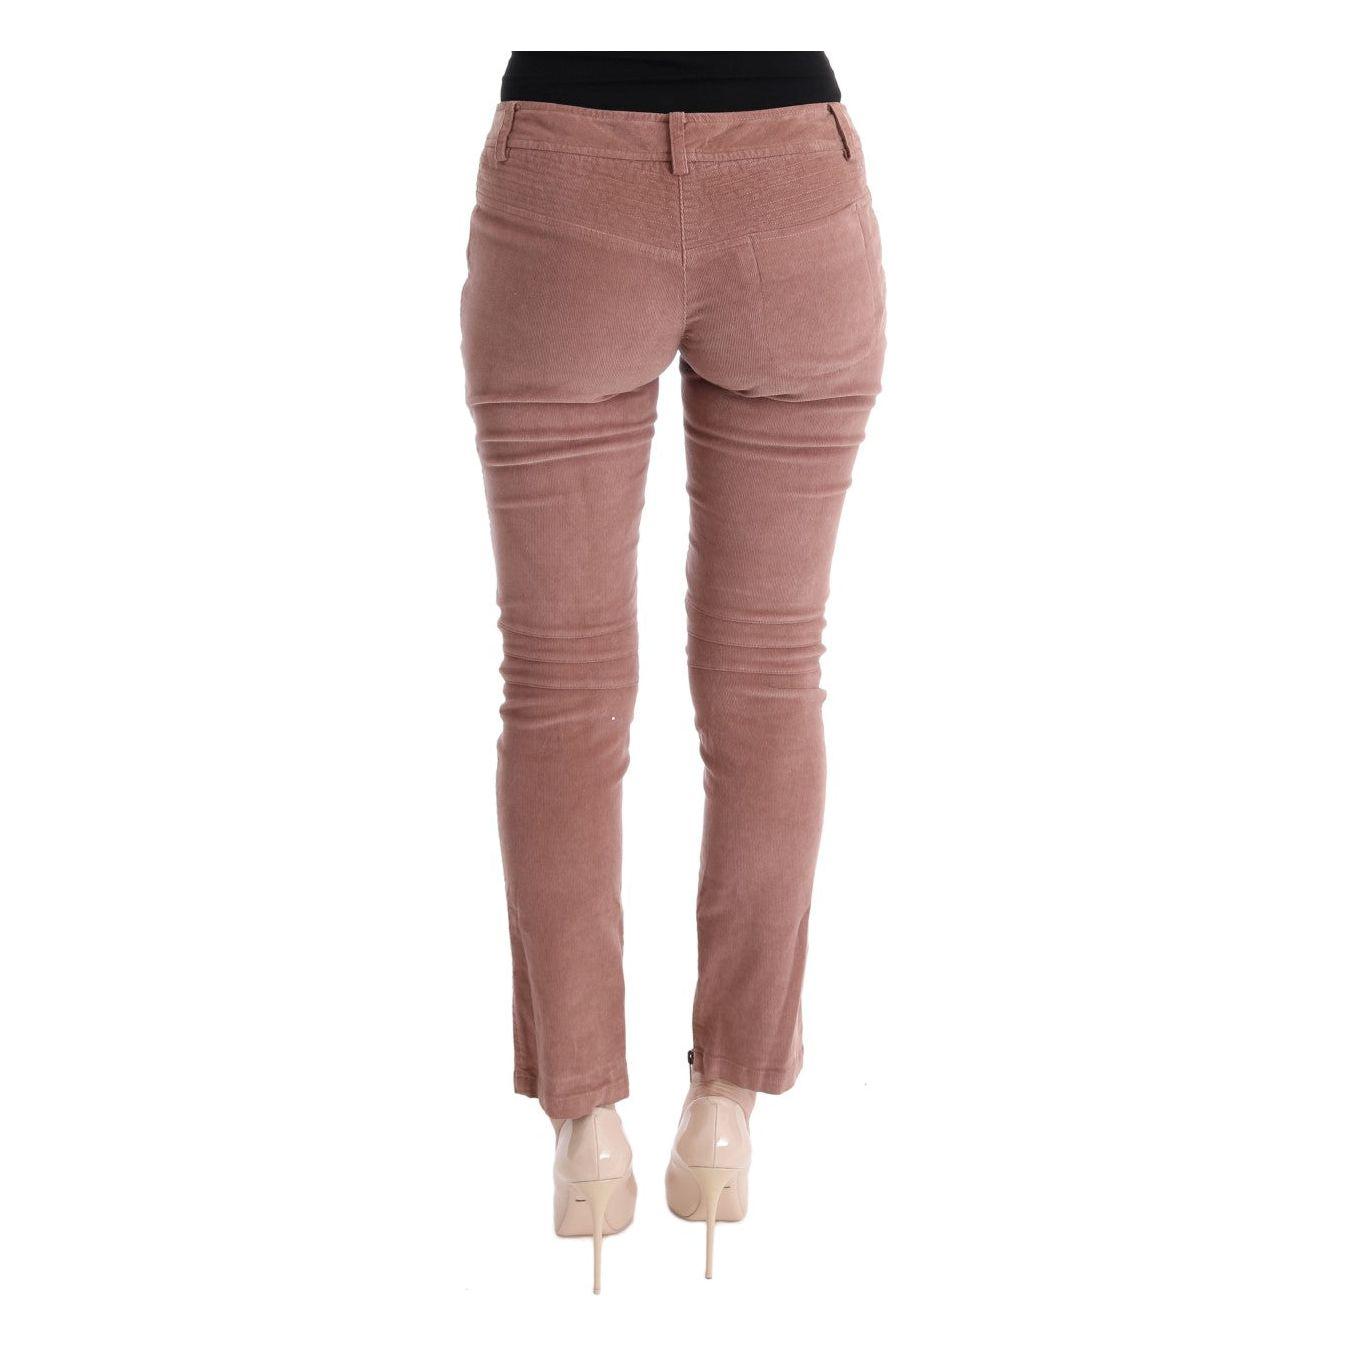 Ermanno Scervino Chic Brown Capri Cropped Pants for Elegant Evenings pink-velvet-cropped-casual-pants 449249-pink-velvet-cropped-casual-pants-2.jpg